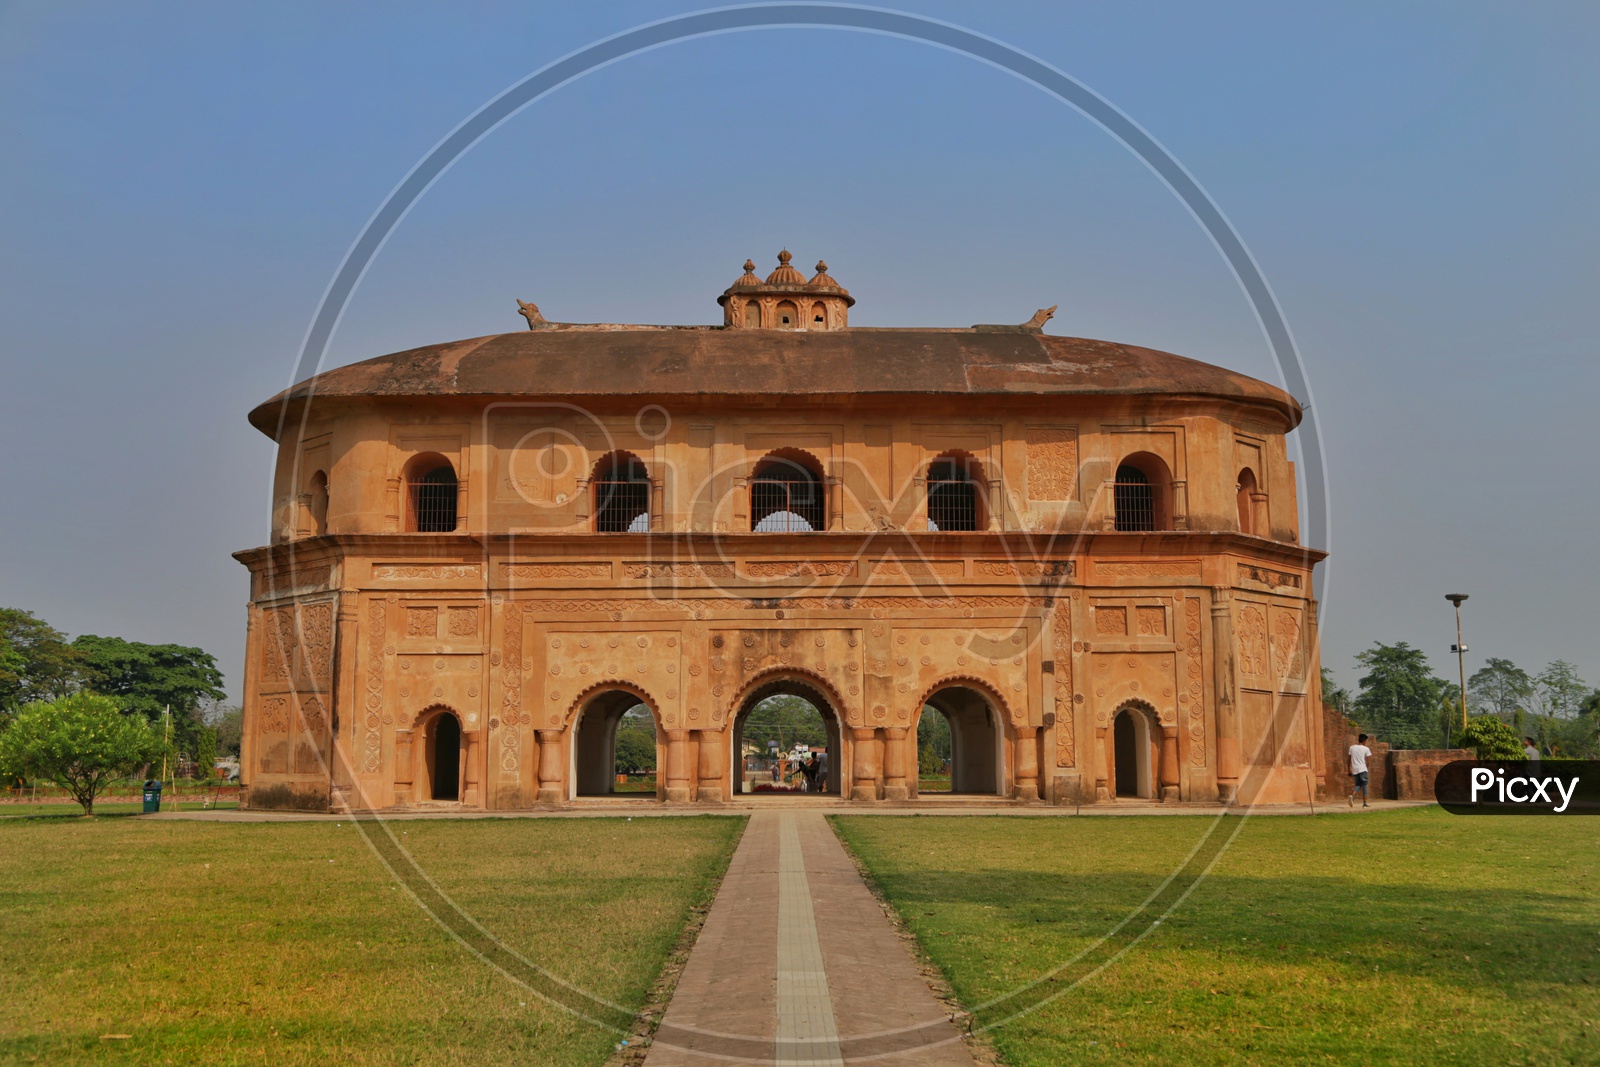 RANG Ghar palace